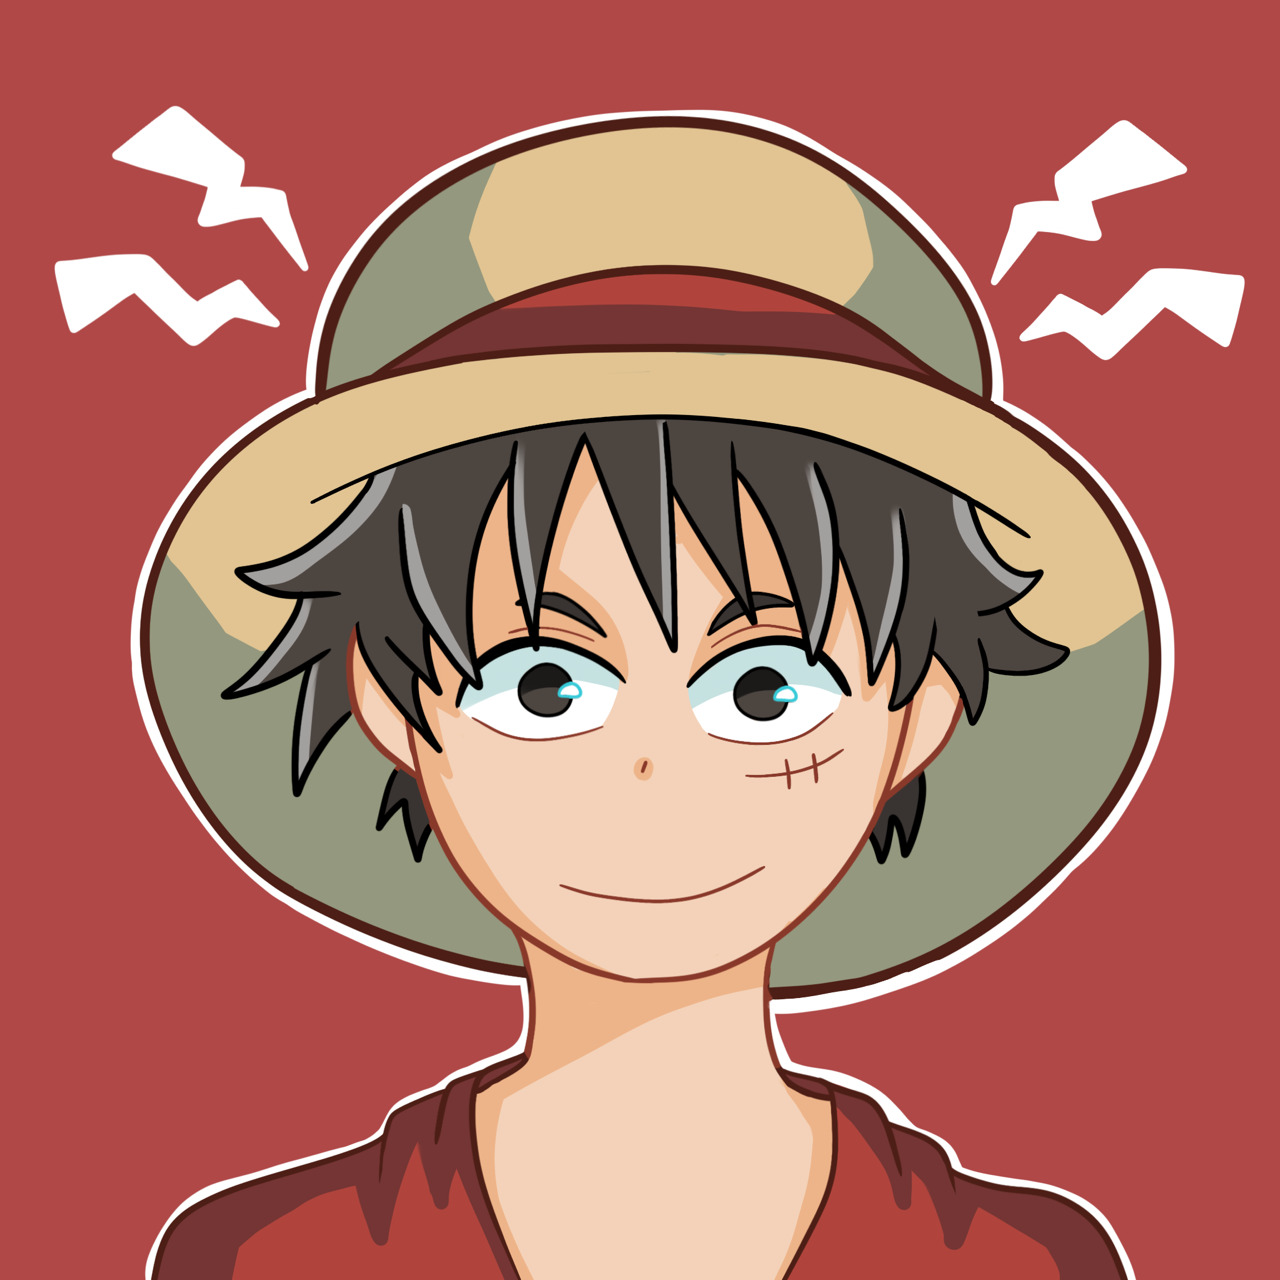 Ảnh avatar One Piece tuyệt đẹp